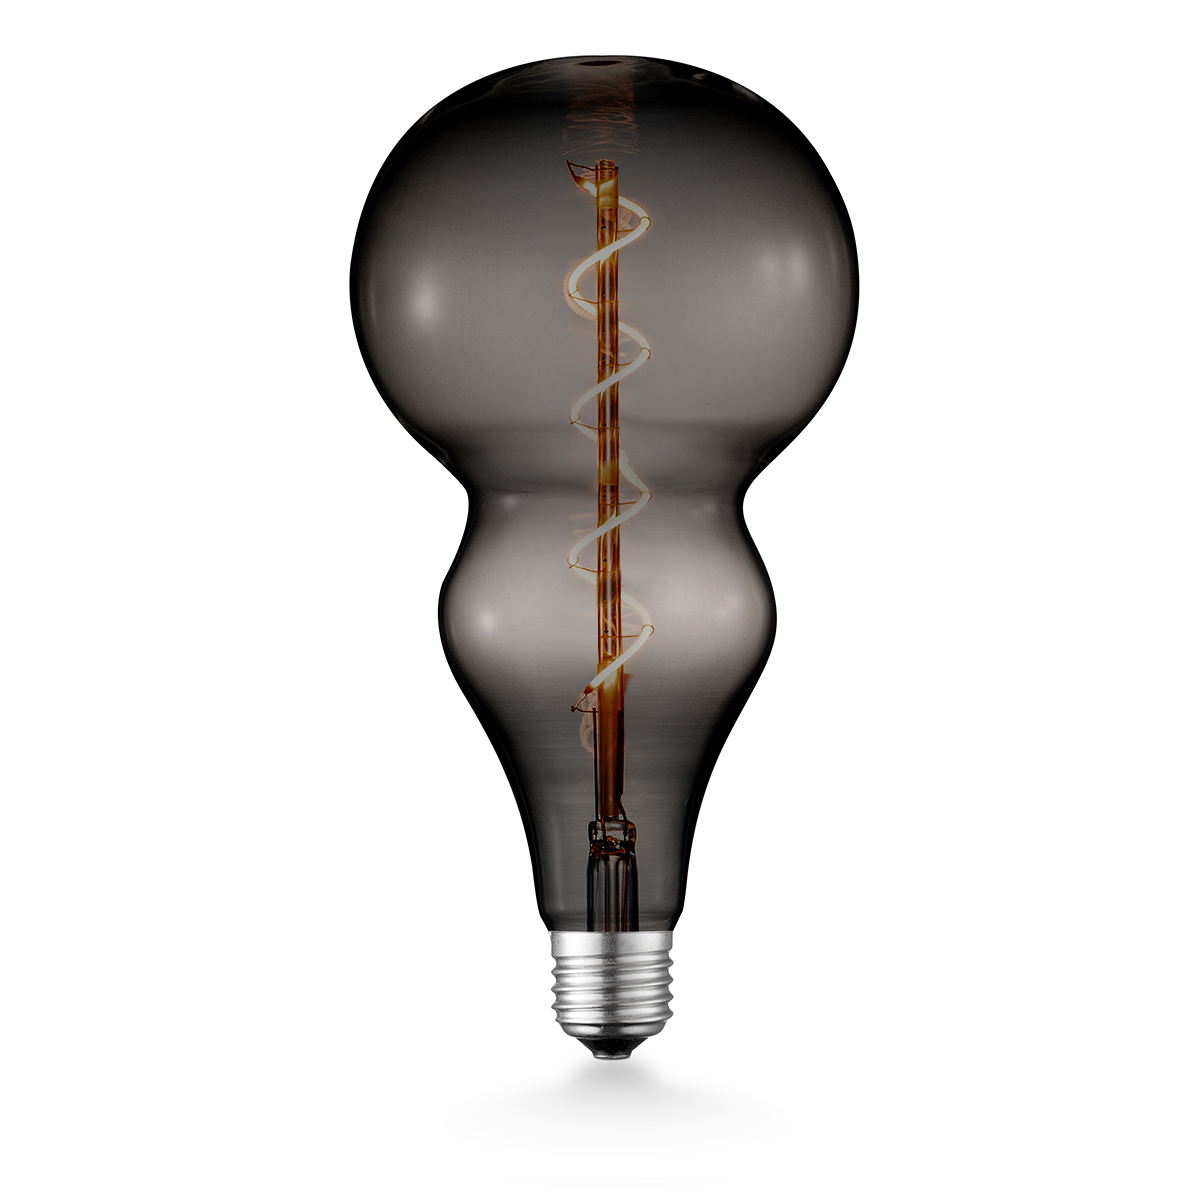 Tangla lighting - TLB-8039-04TM - LED Light Bulb Single Spiral filament - special 4W titanium - bottle - dimmable - E27